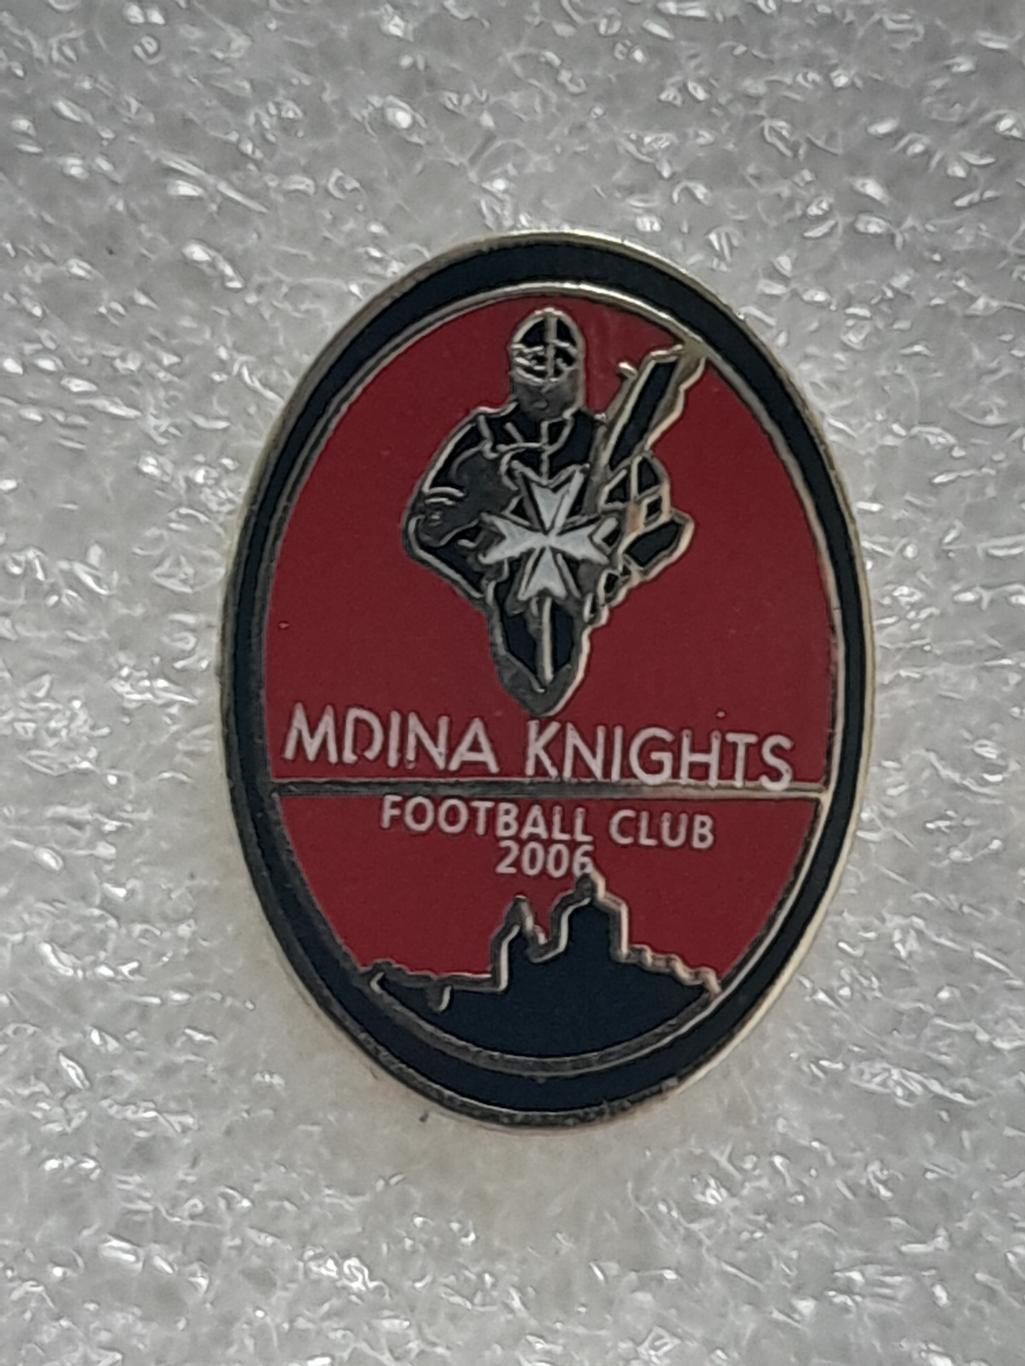 ФК Мдина Найтс(Мальта)/Mdina Knights FC, Malta